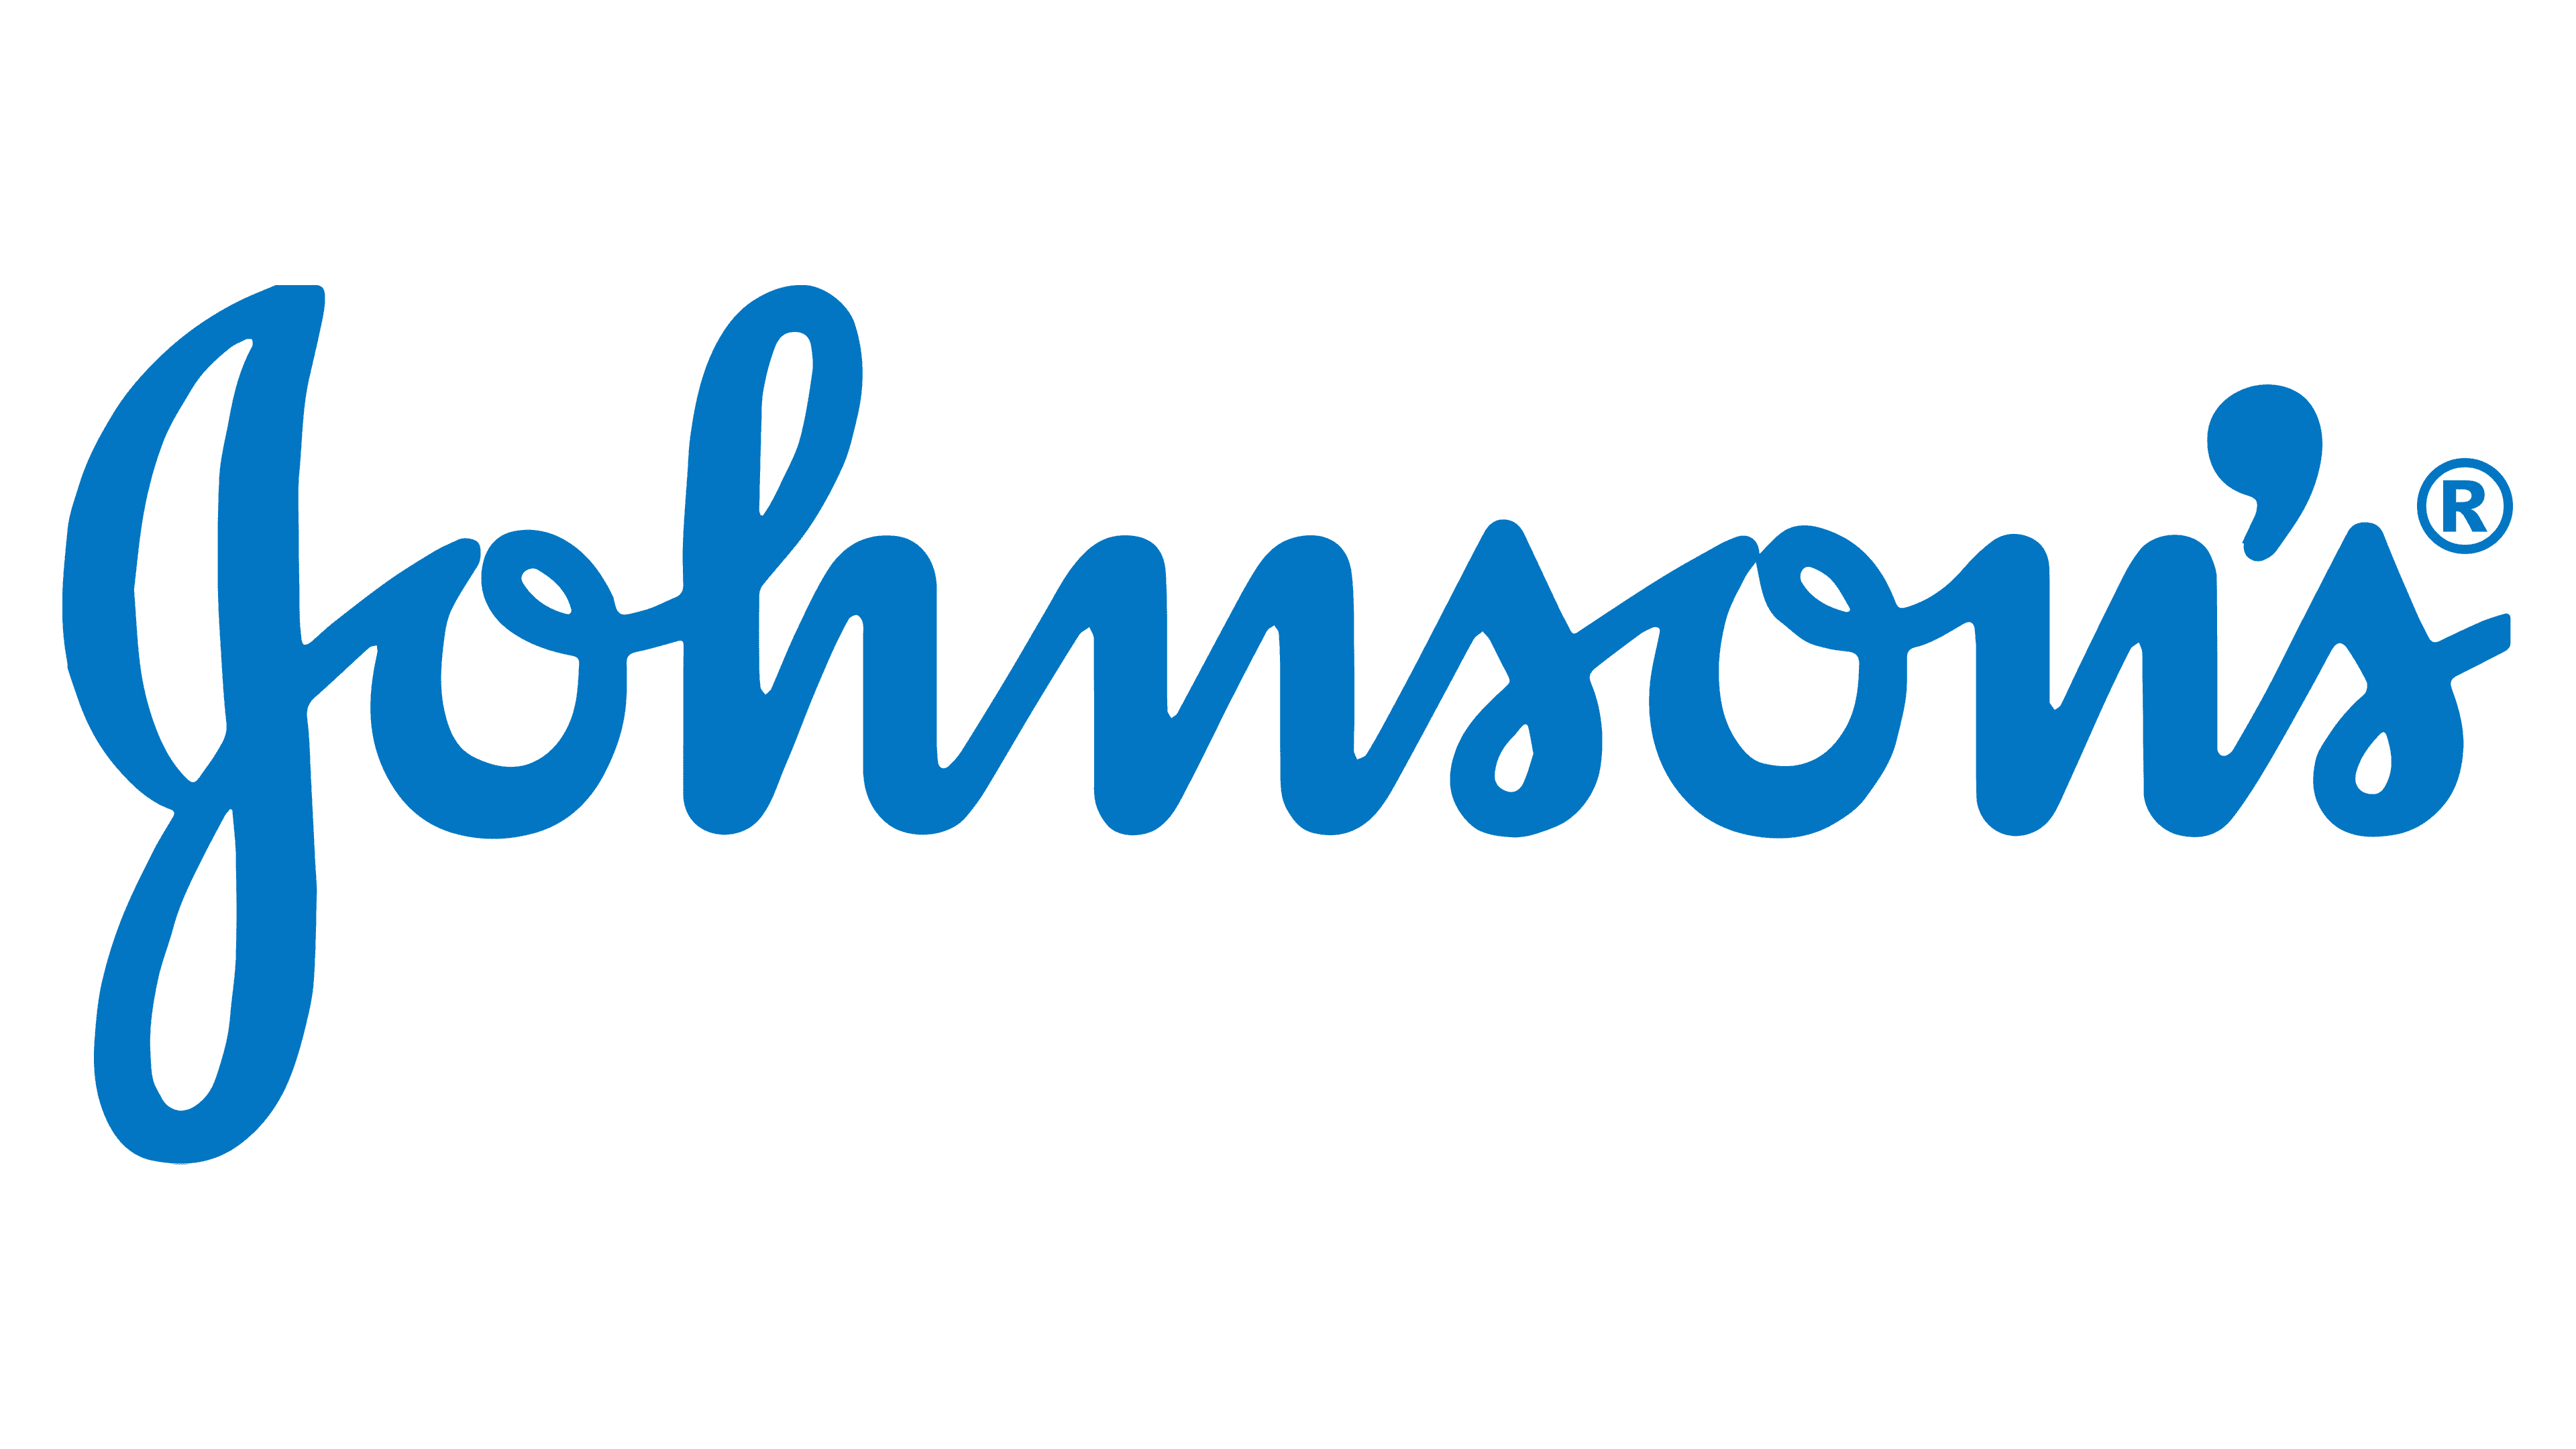 Johnson And Johnson Logo PNG Free Image